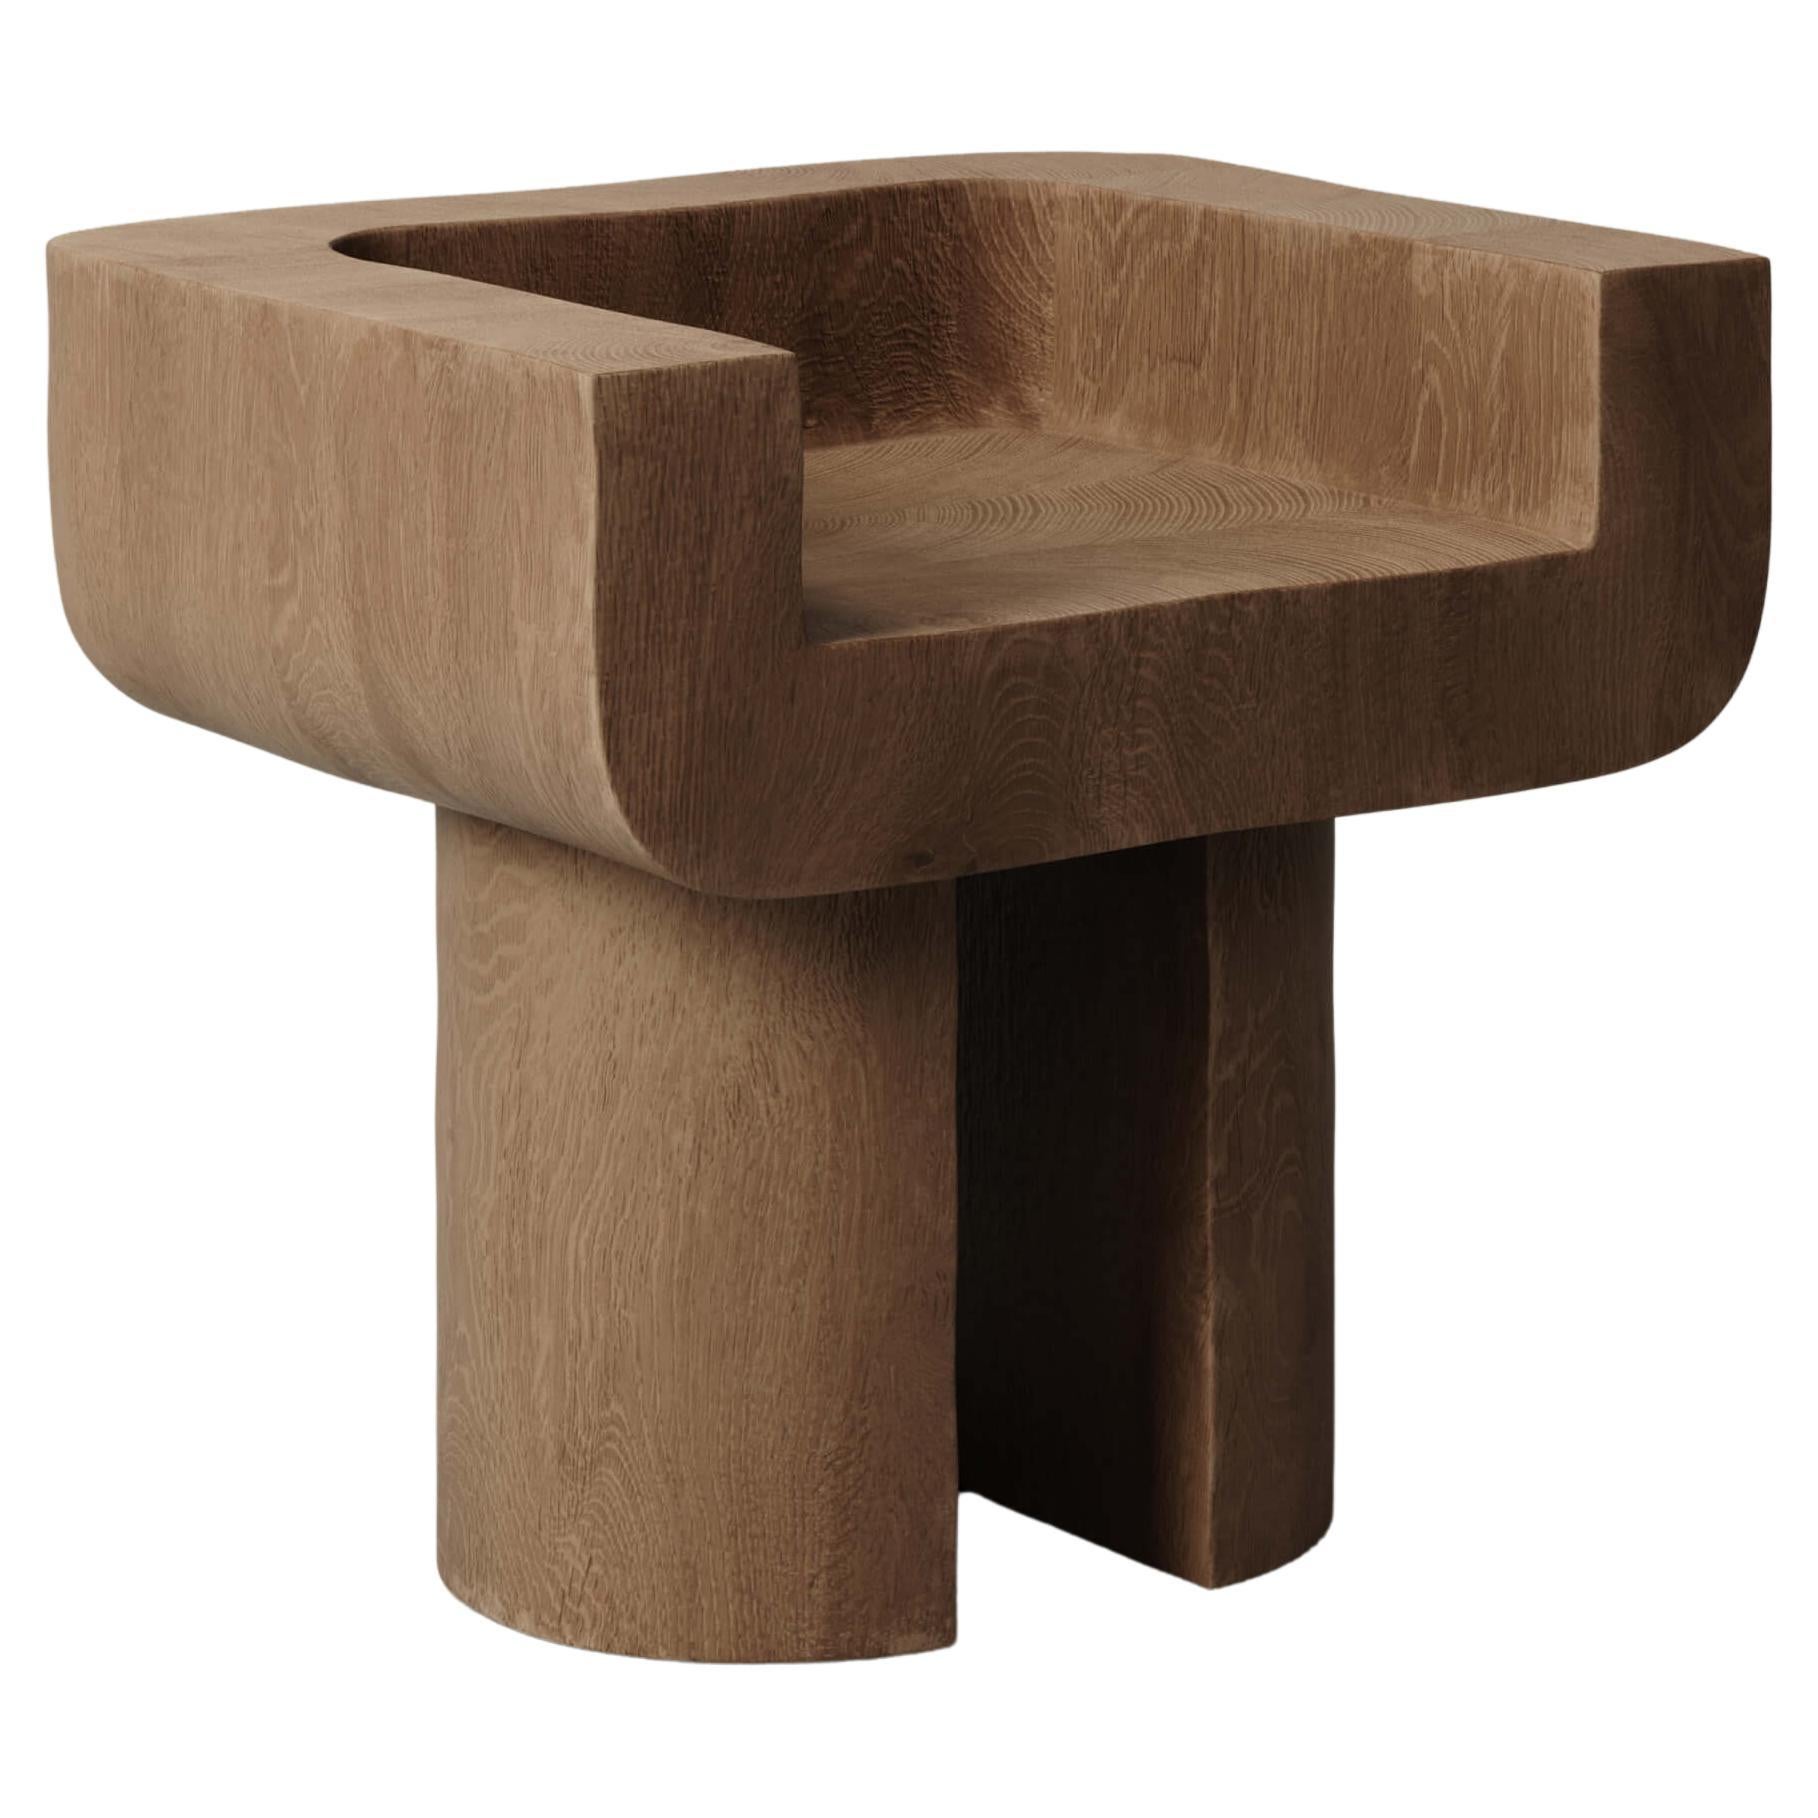 M_001 Oak Chair by Monolith Studio For Sale